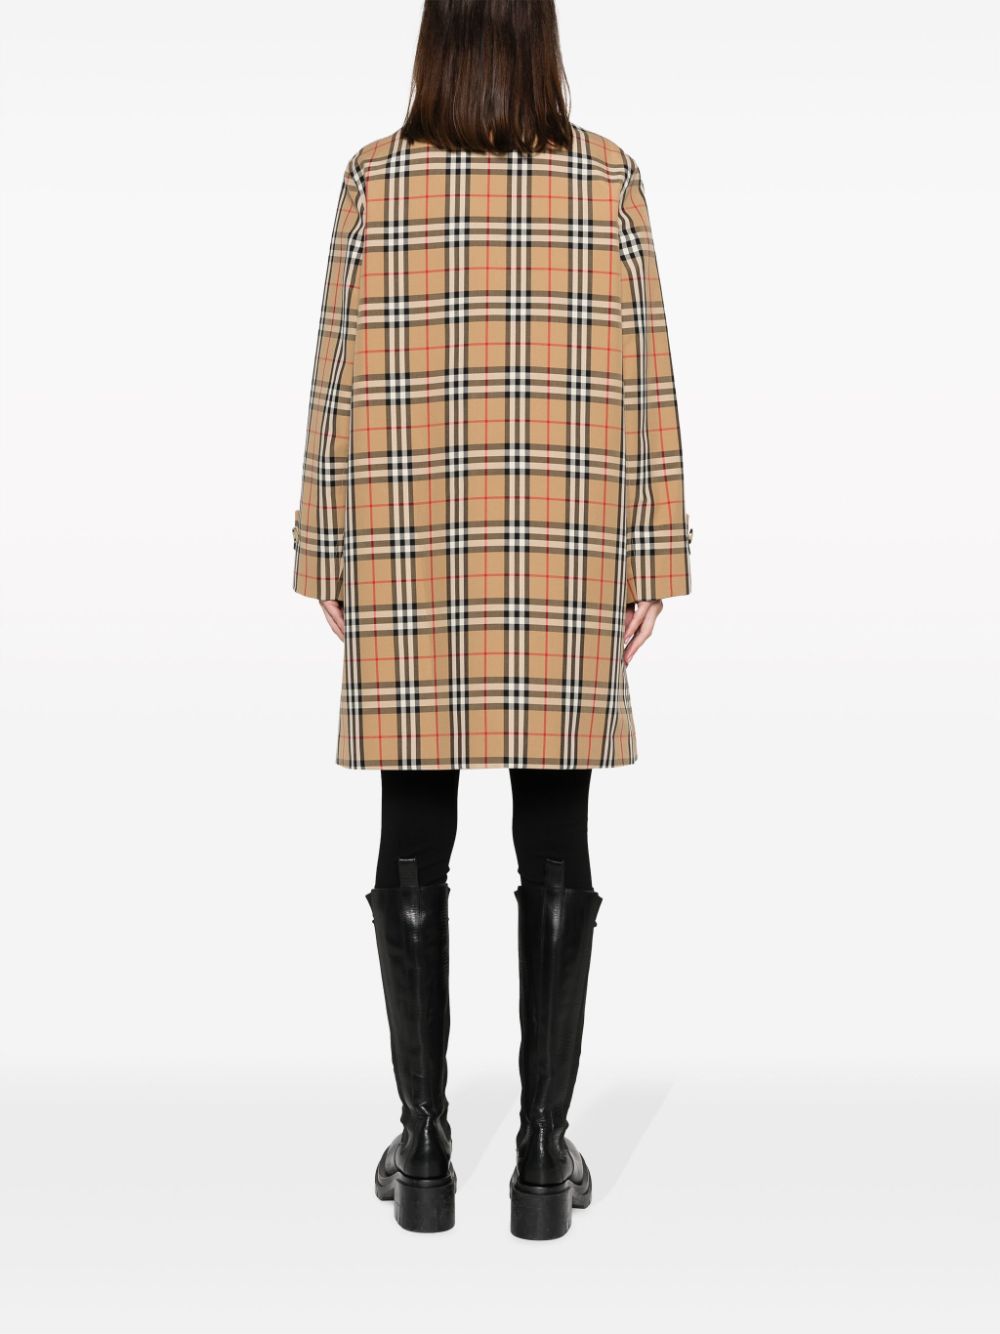 BURBERRY Plaid-Check Raincoat for Women by British Luxury Brand